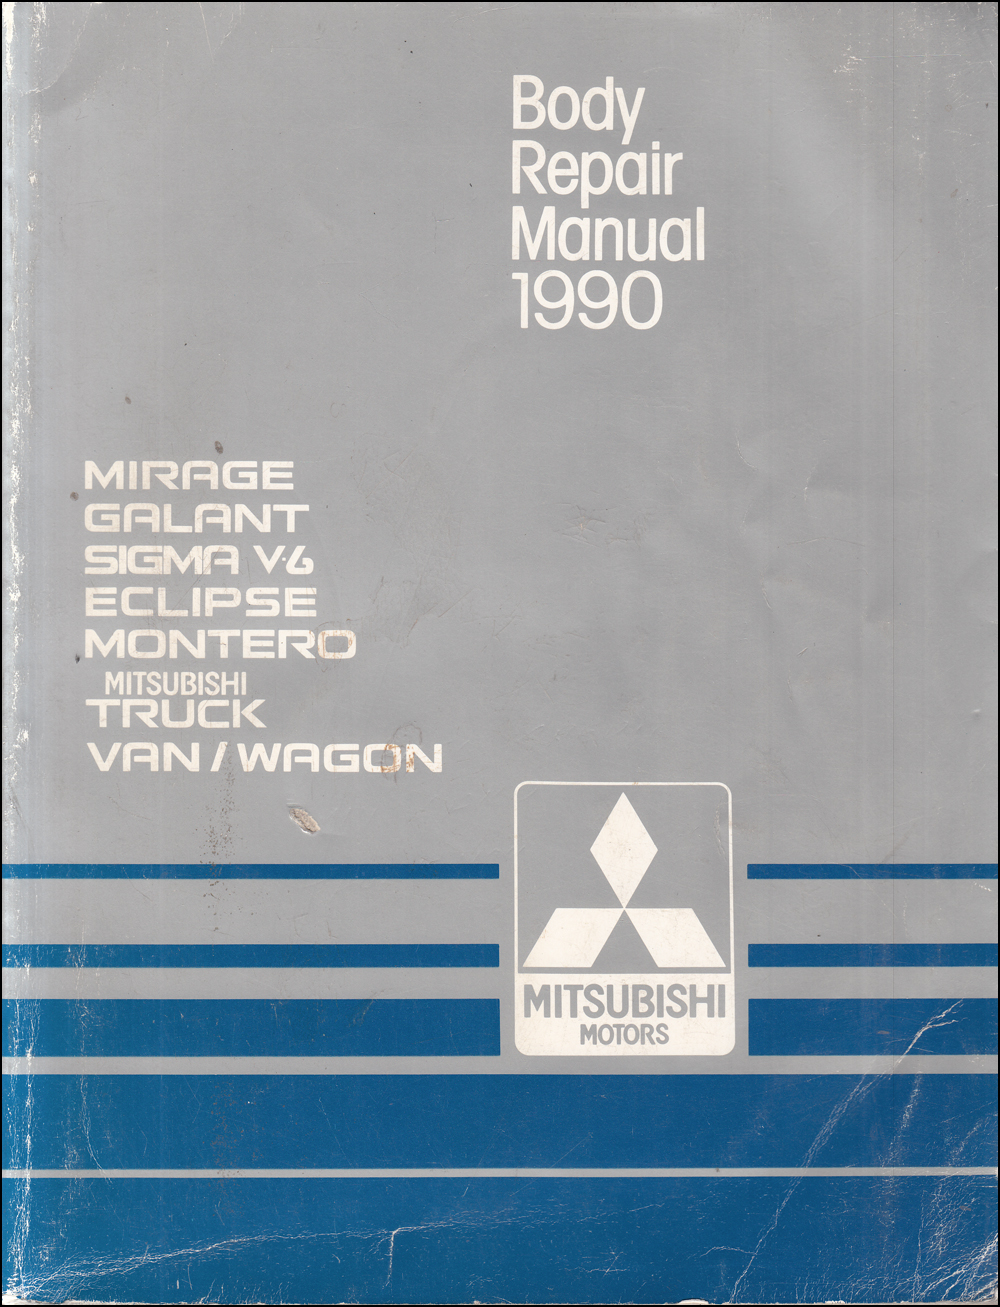 1990 Mitsubishi Body Manual Original